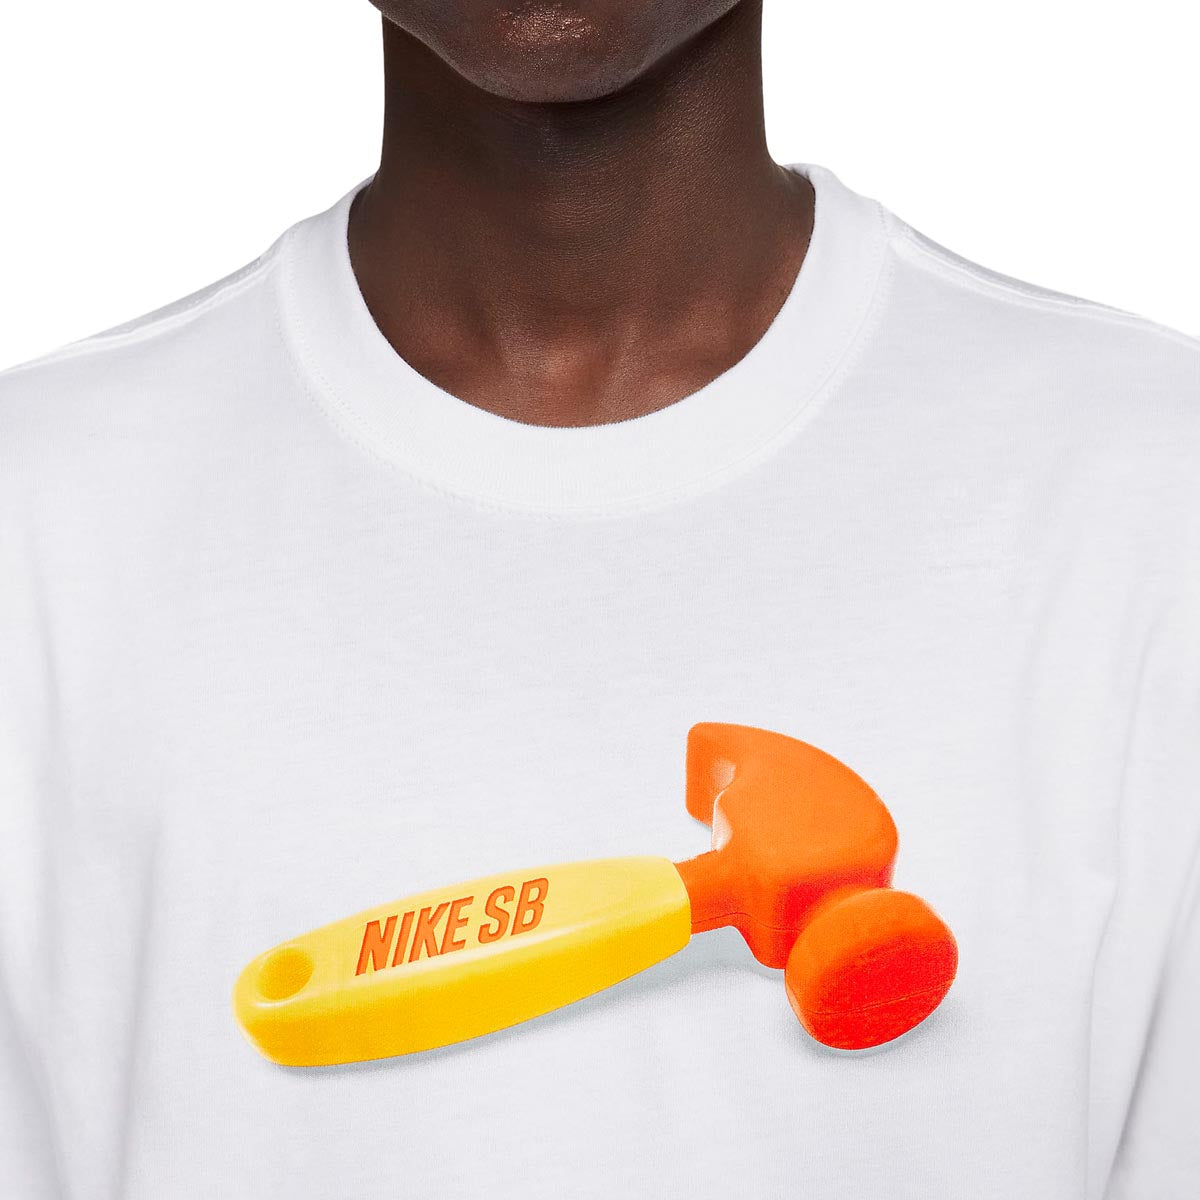 Nike SB Hammer T-Shirt - White image 3